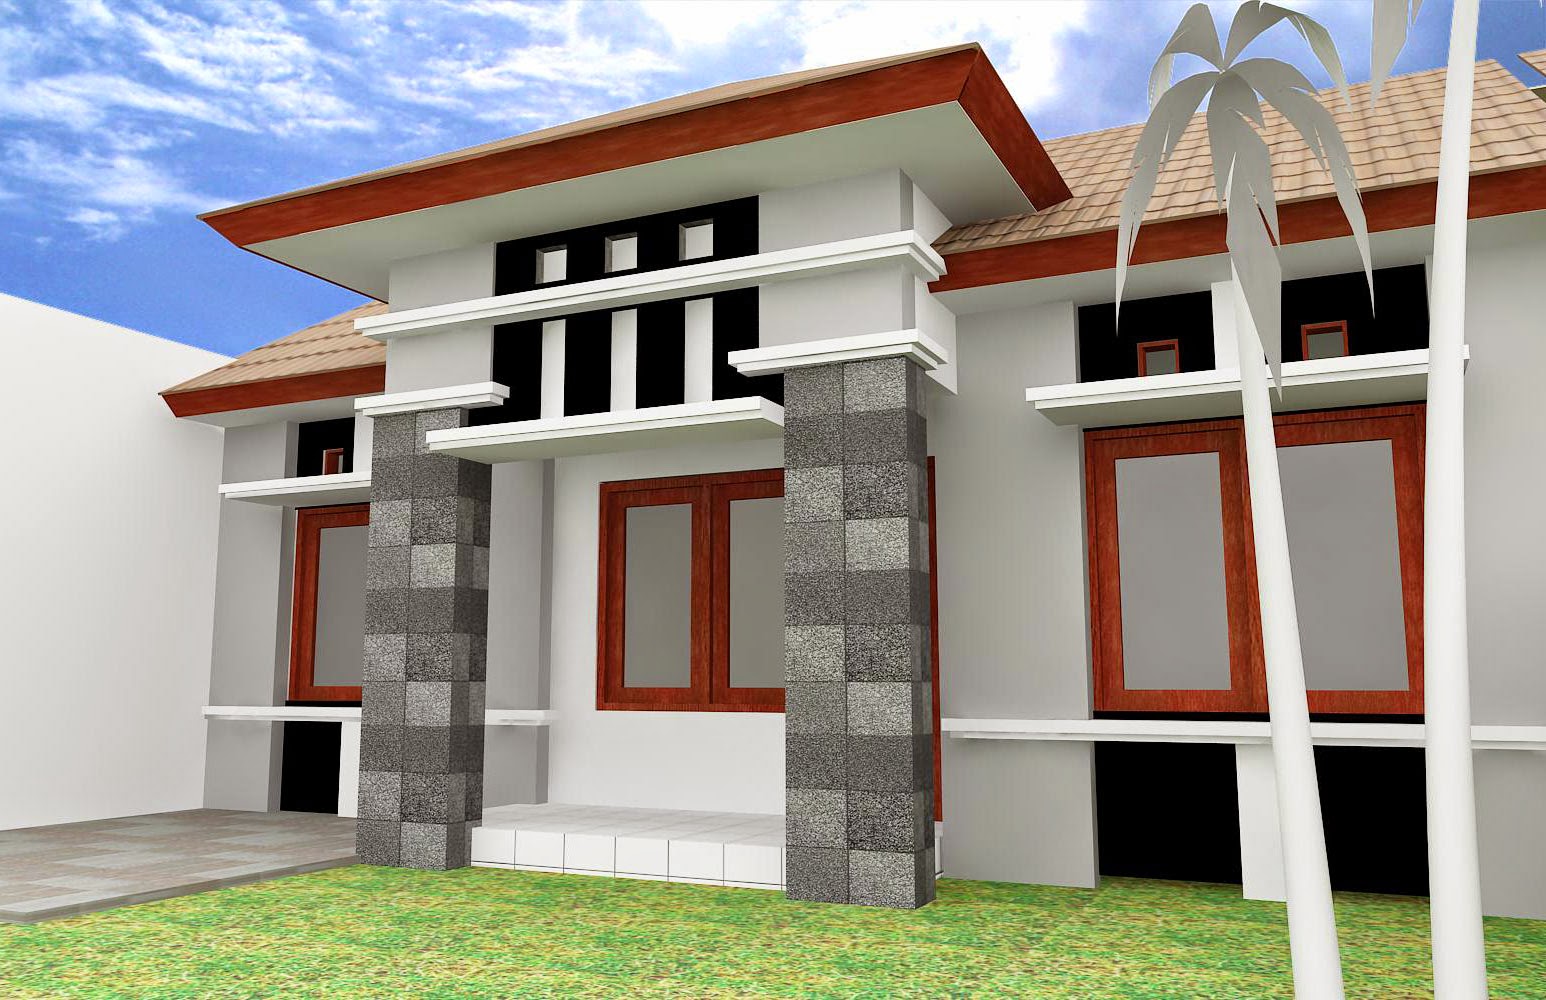 43 Desain pilar teras rumah minimalis modern